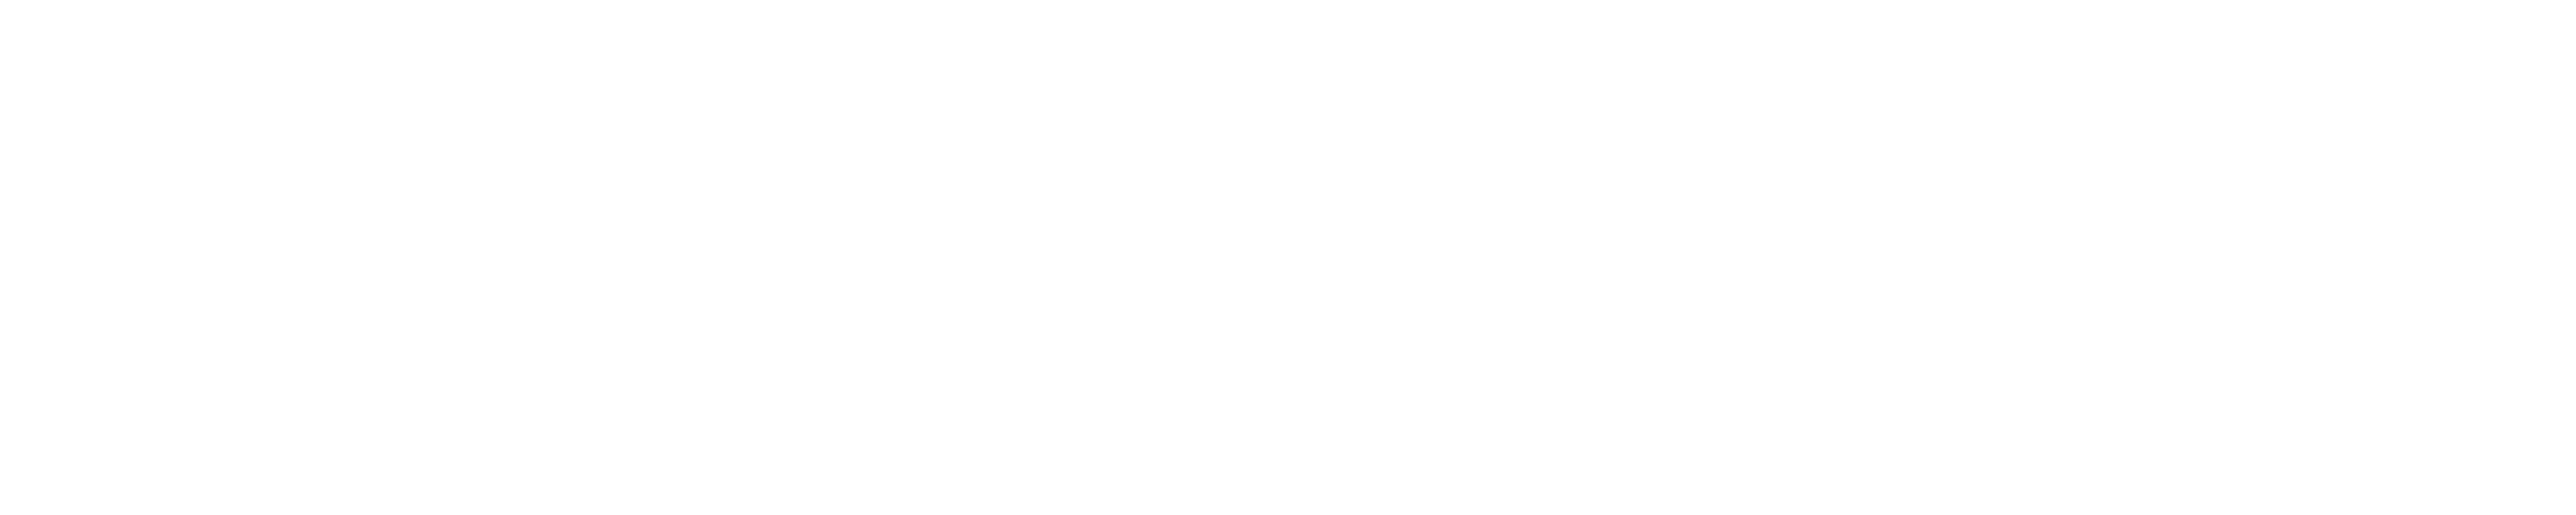 ConnectSmart Logo White